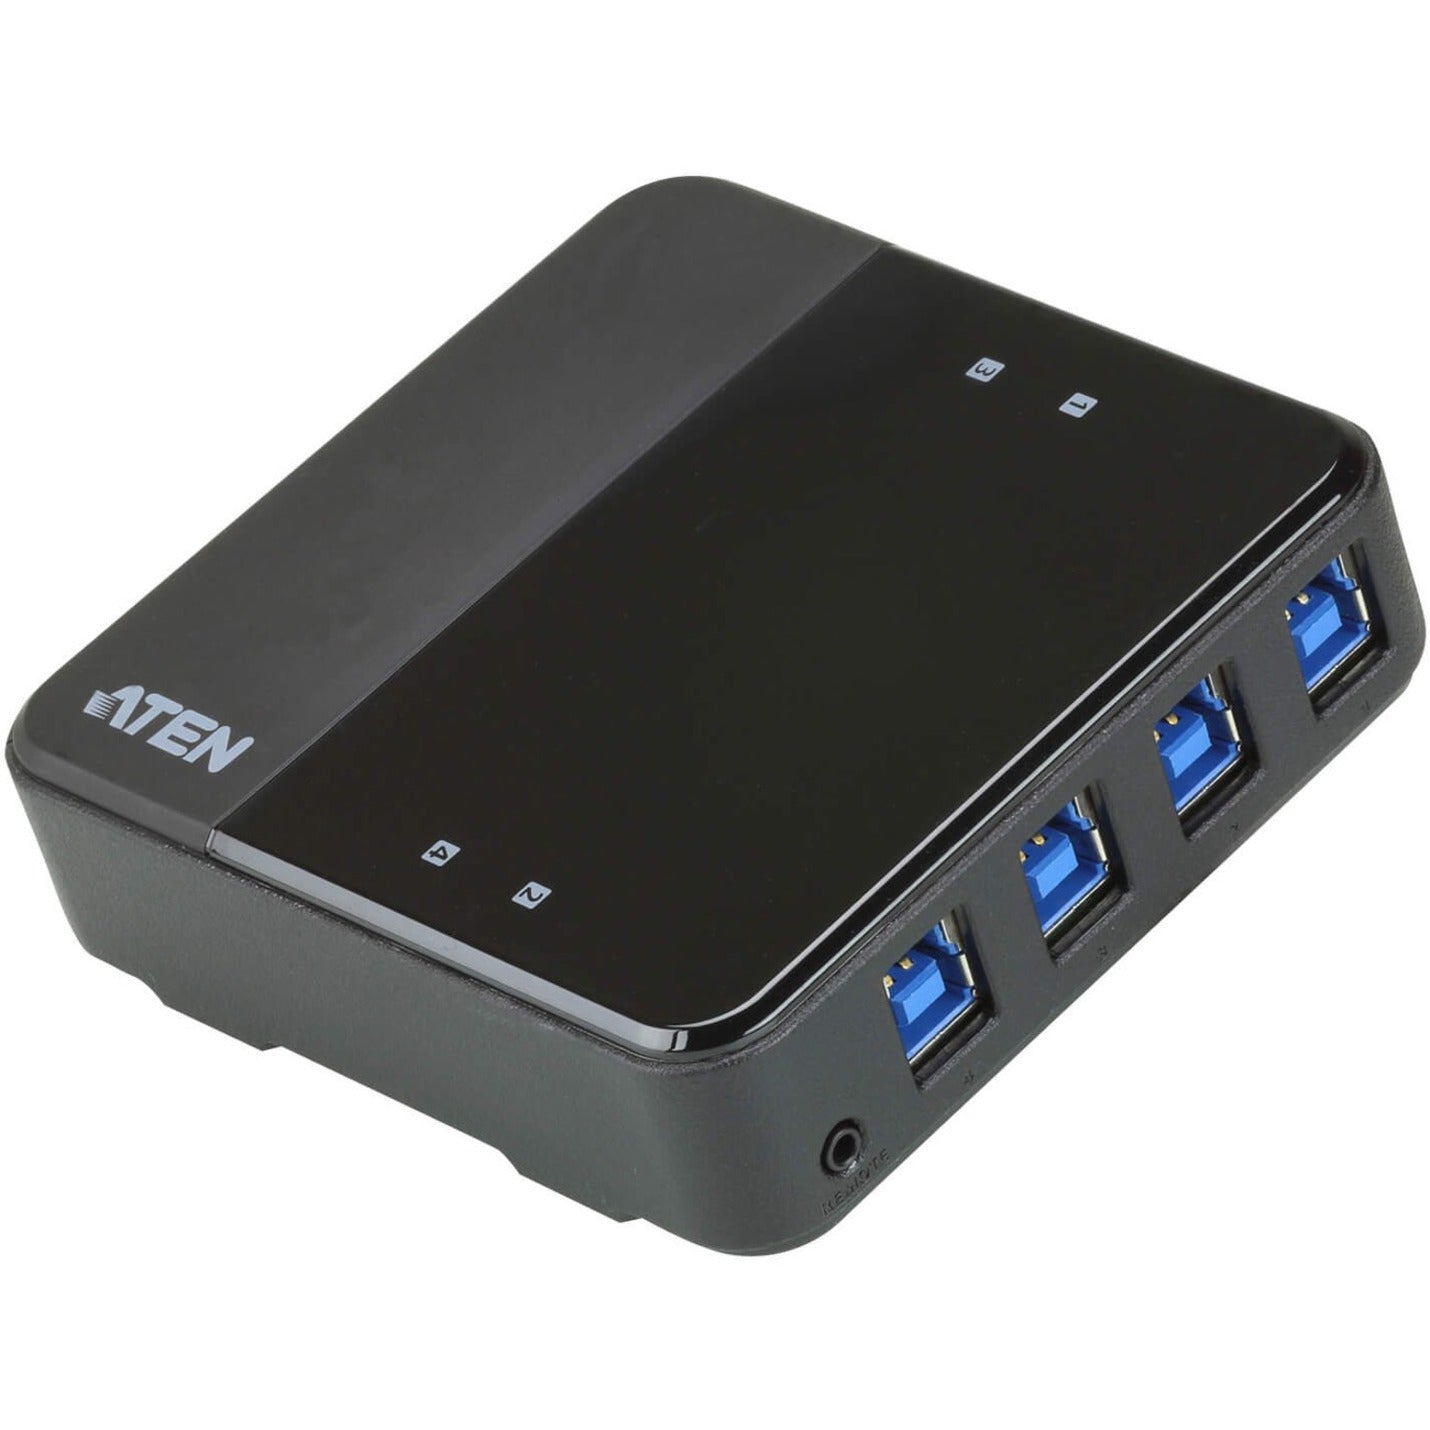 ATEN US3344 4 x 4 USB 3.2 Gen1 Peripheral Sharing Switch, 8 USB Ports, USB 3.2 Gen 1 Type-B Interface